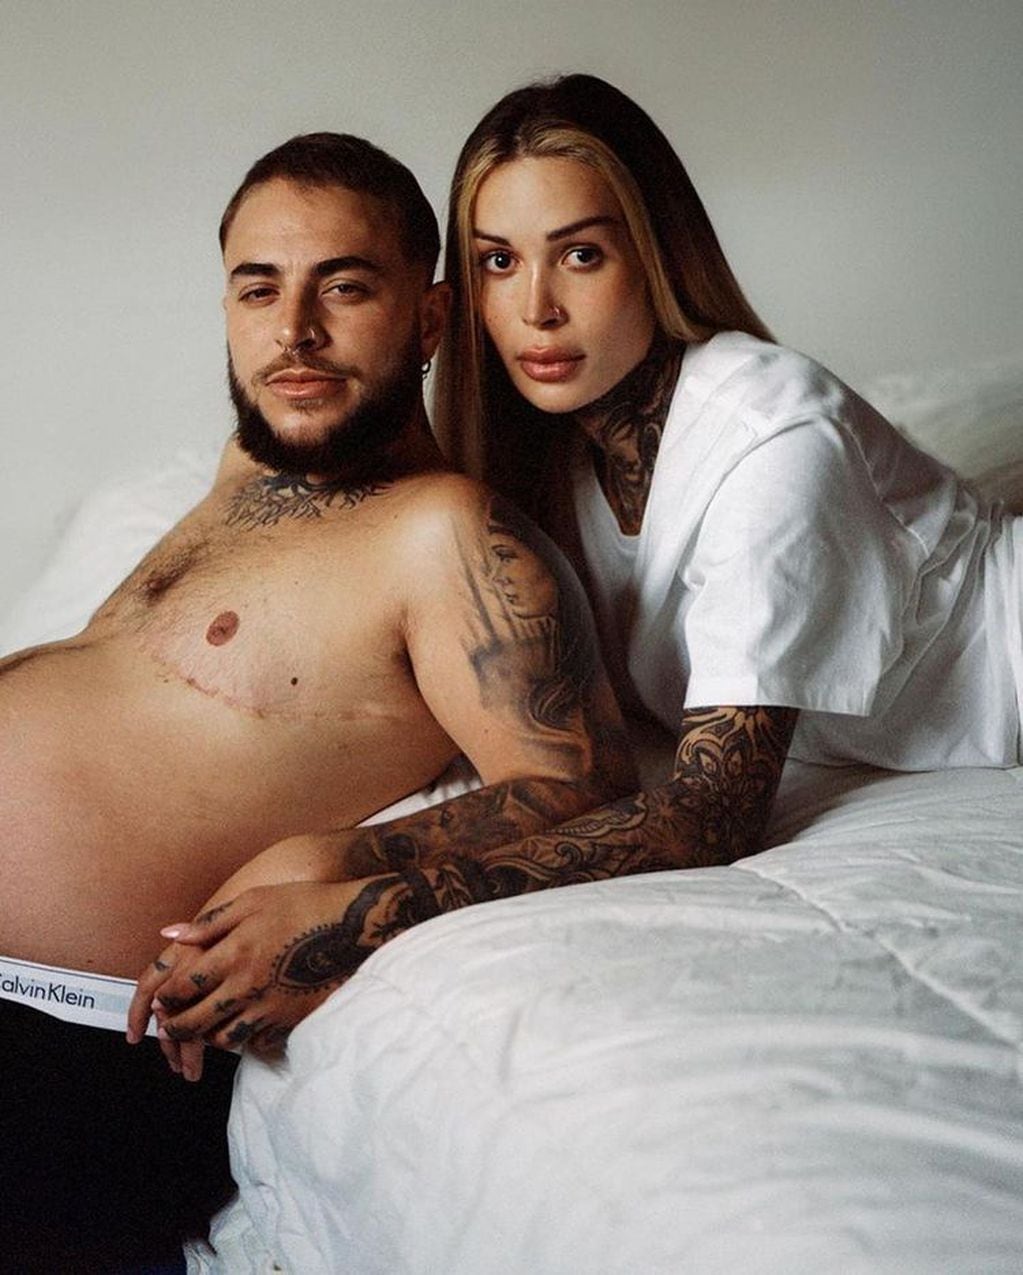 Calvin Klein lanzó una campaña con un modelo trans embarazado de protagonista.